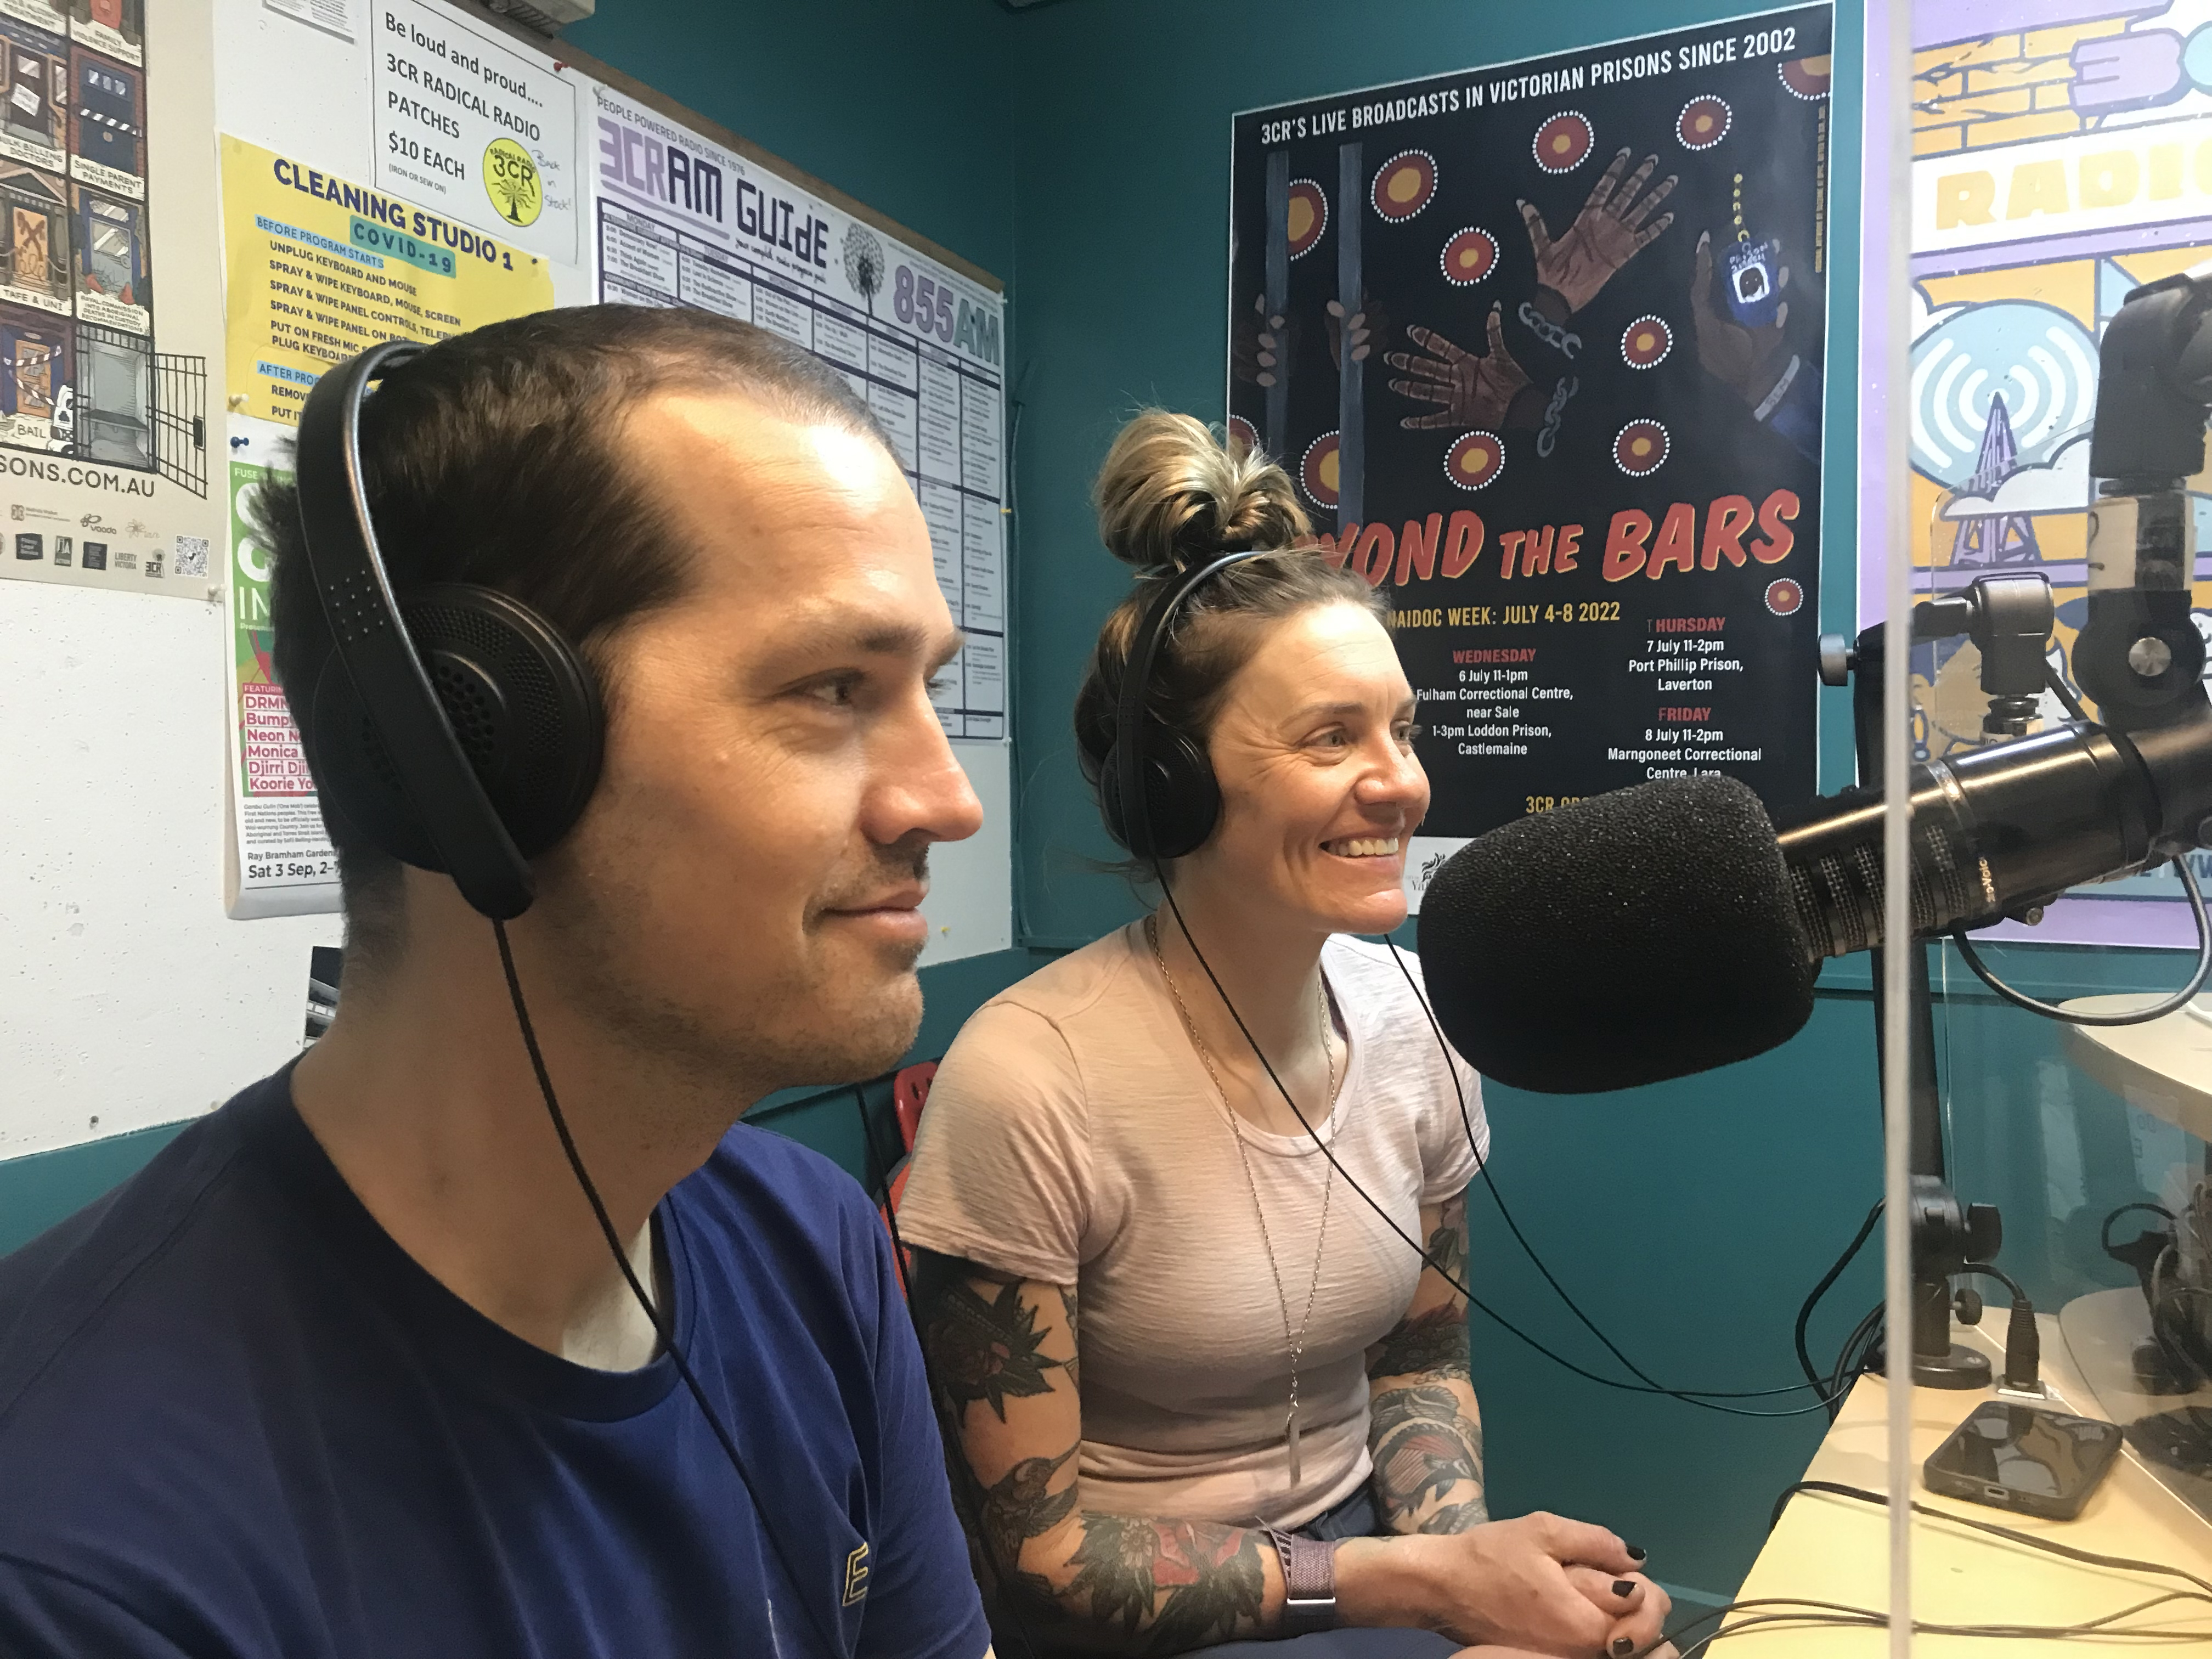 Sarah Hammond & Jesse Carlsson in the 3CR studio for the Yarra BUG Radio Show 